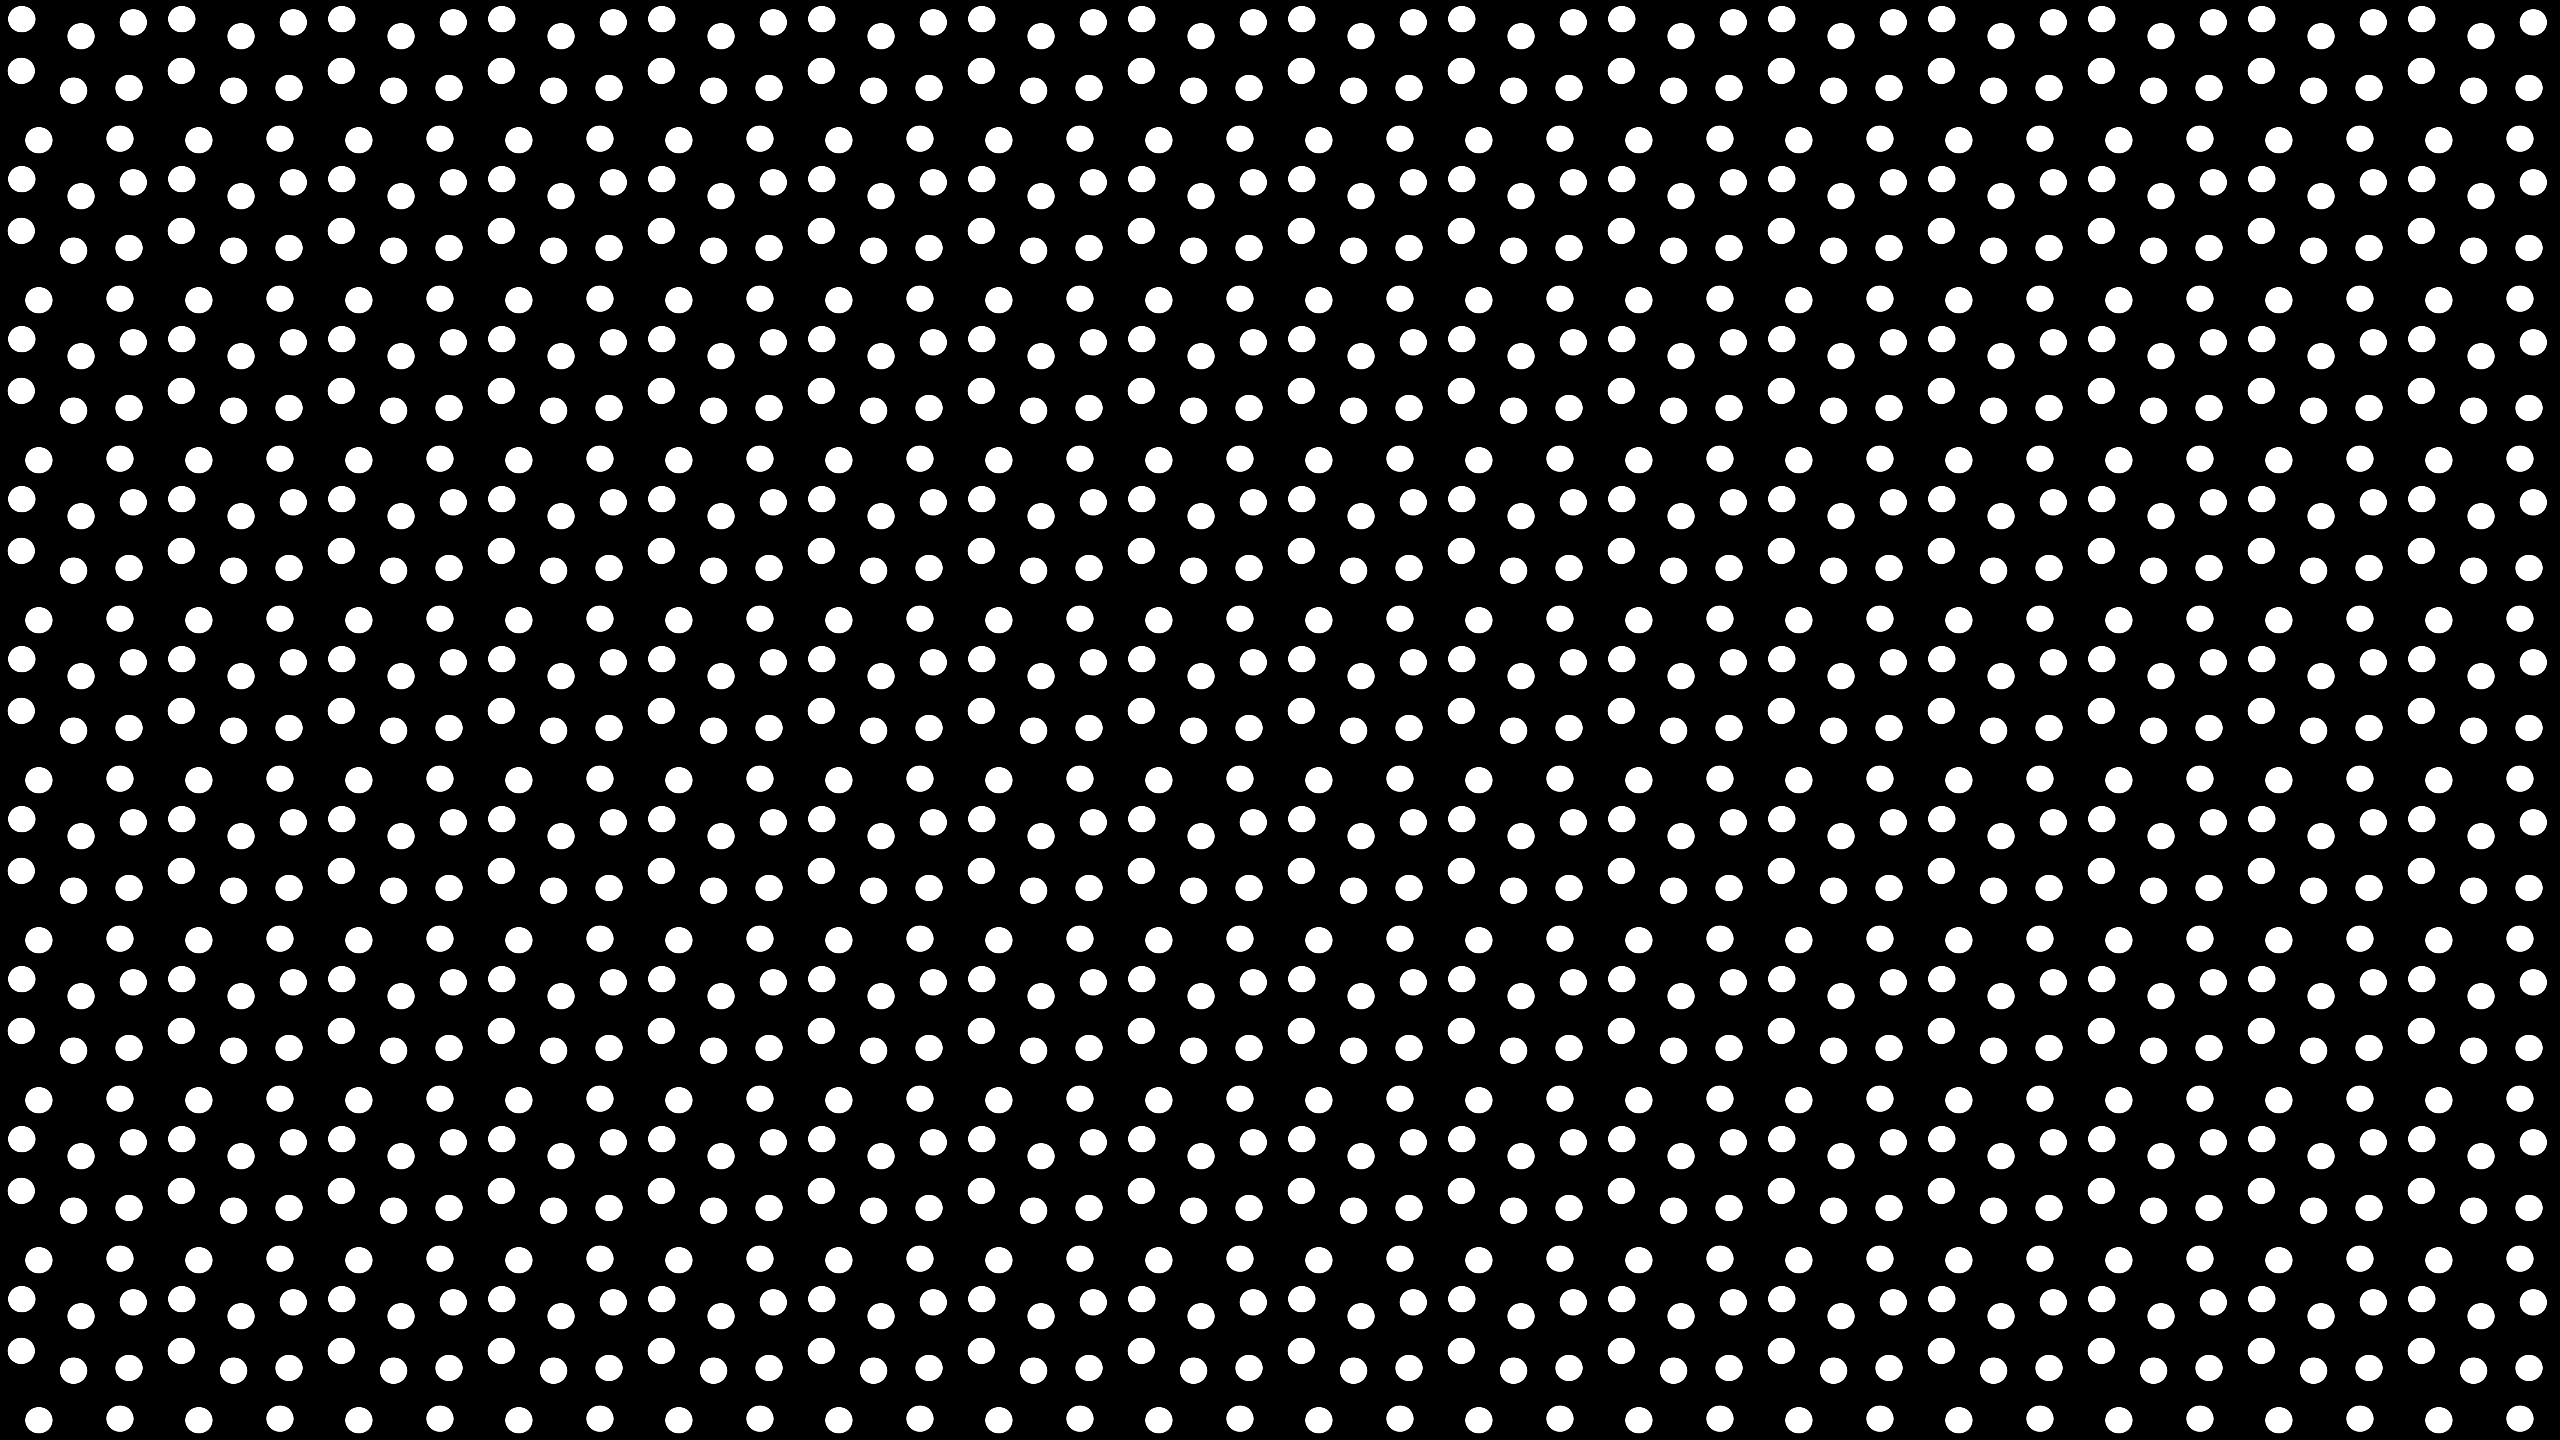 Black Polka Dots Desktop Wallpaper Is Easy Just Save The